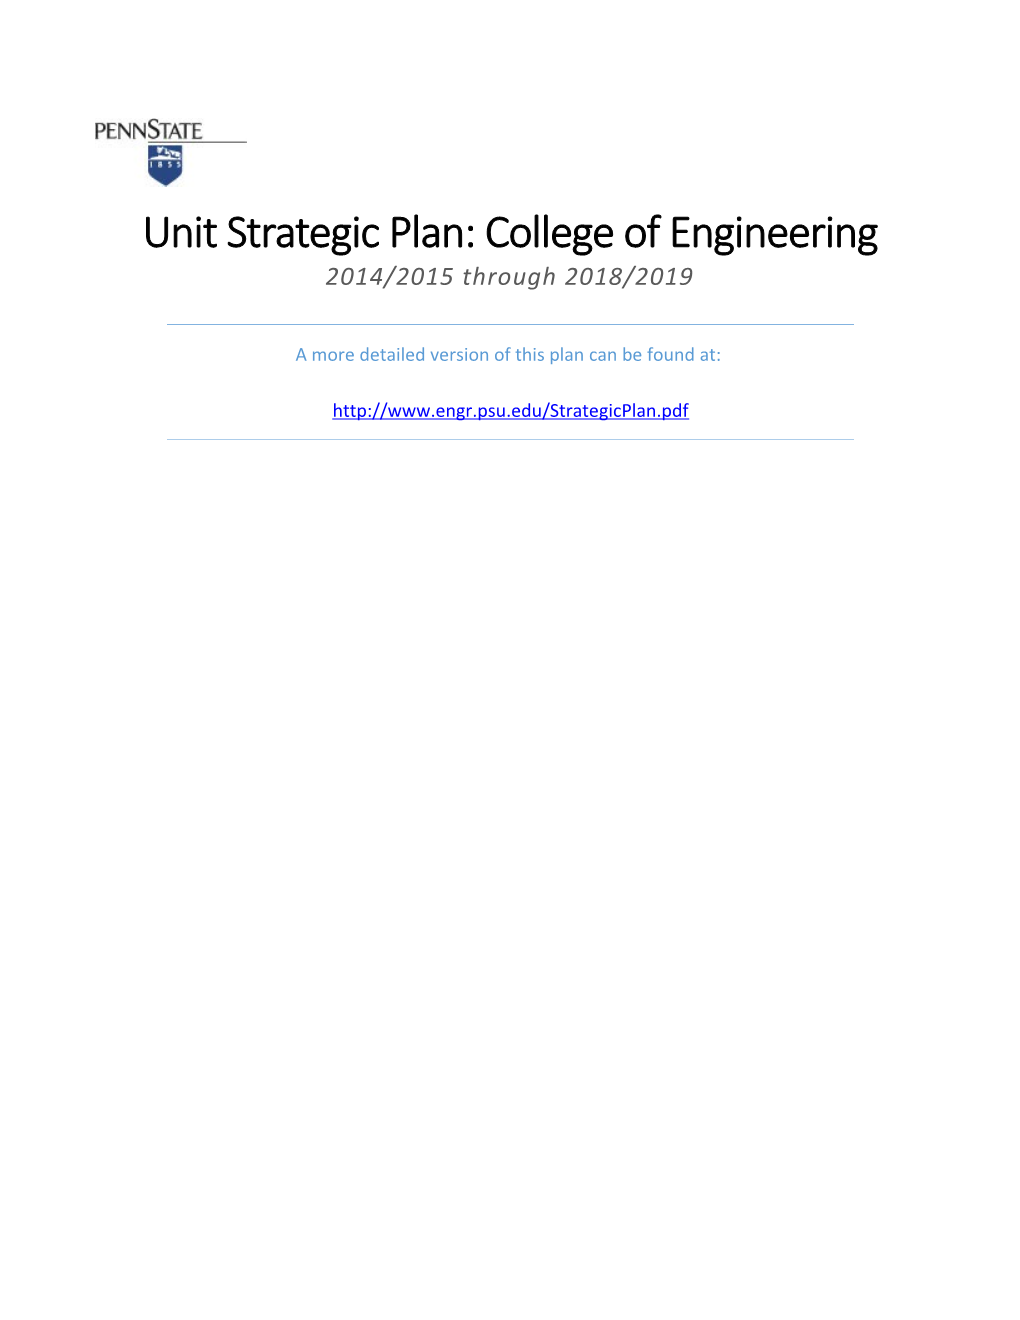 Penn State College of Engineering Strategic Plan